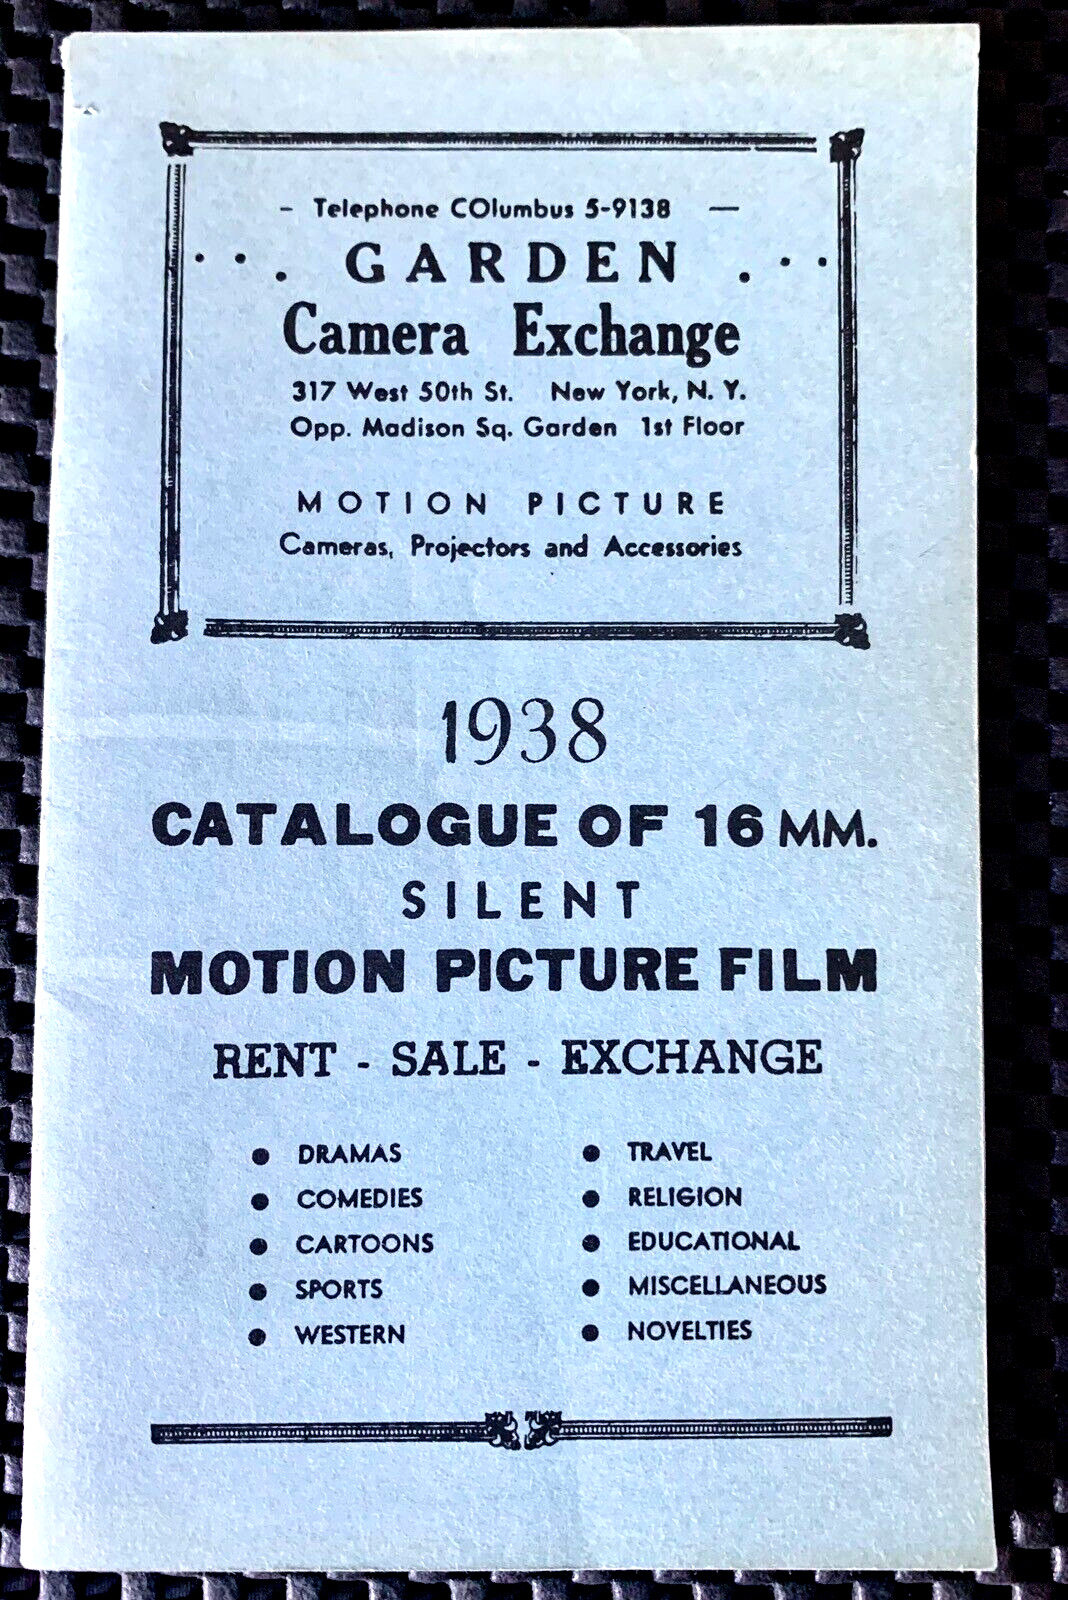 GARDEN CAMERA EXCHANGE NEW YORK 1938 CATALOG OF 16MM SILENT MOTION PICTURE FILM